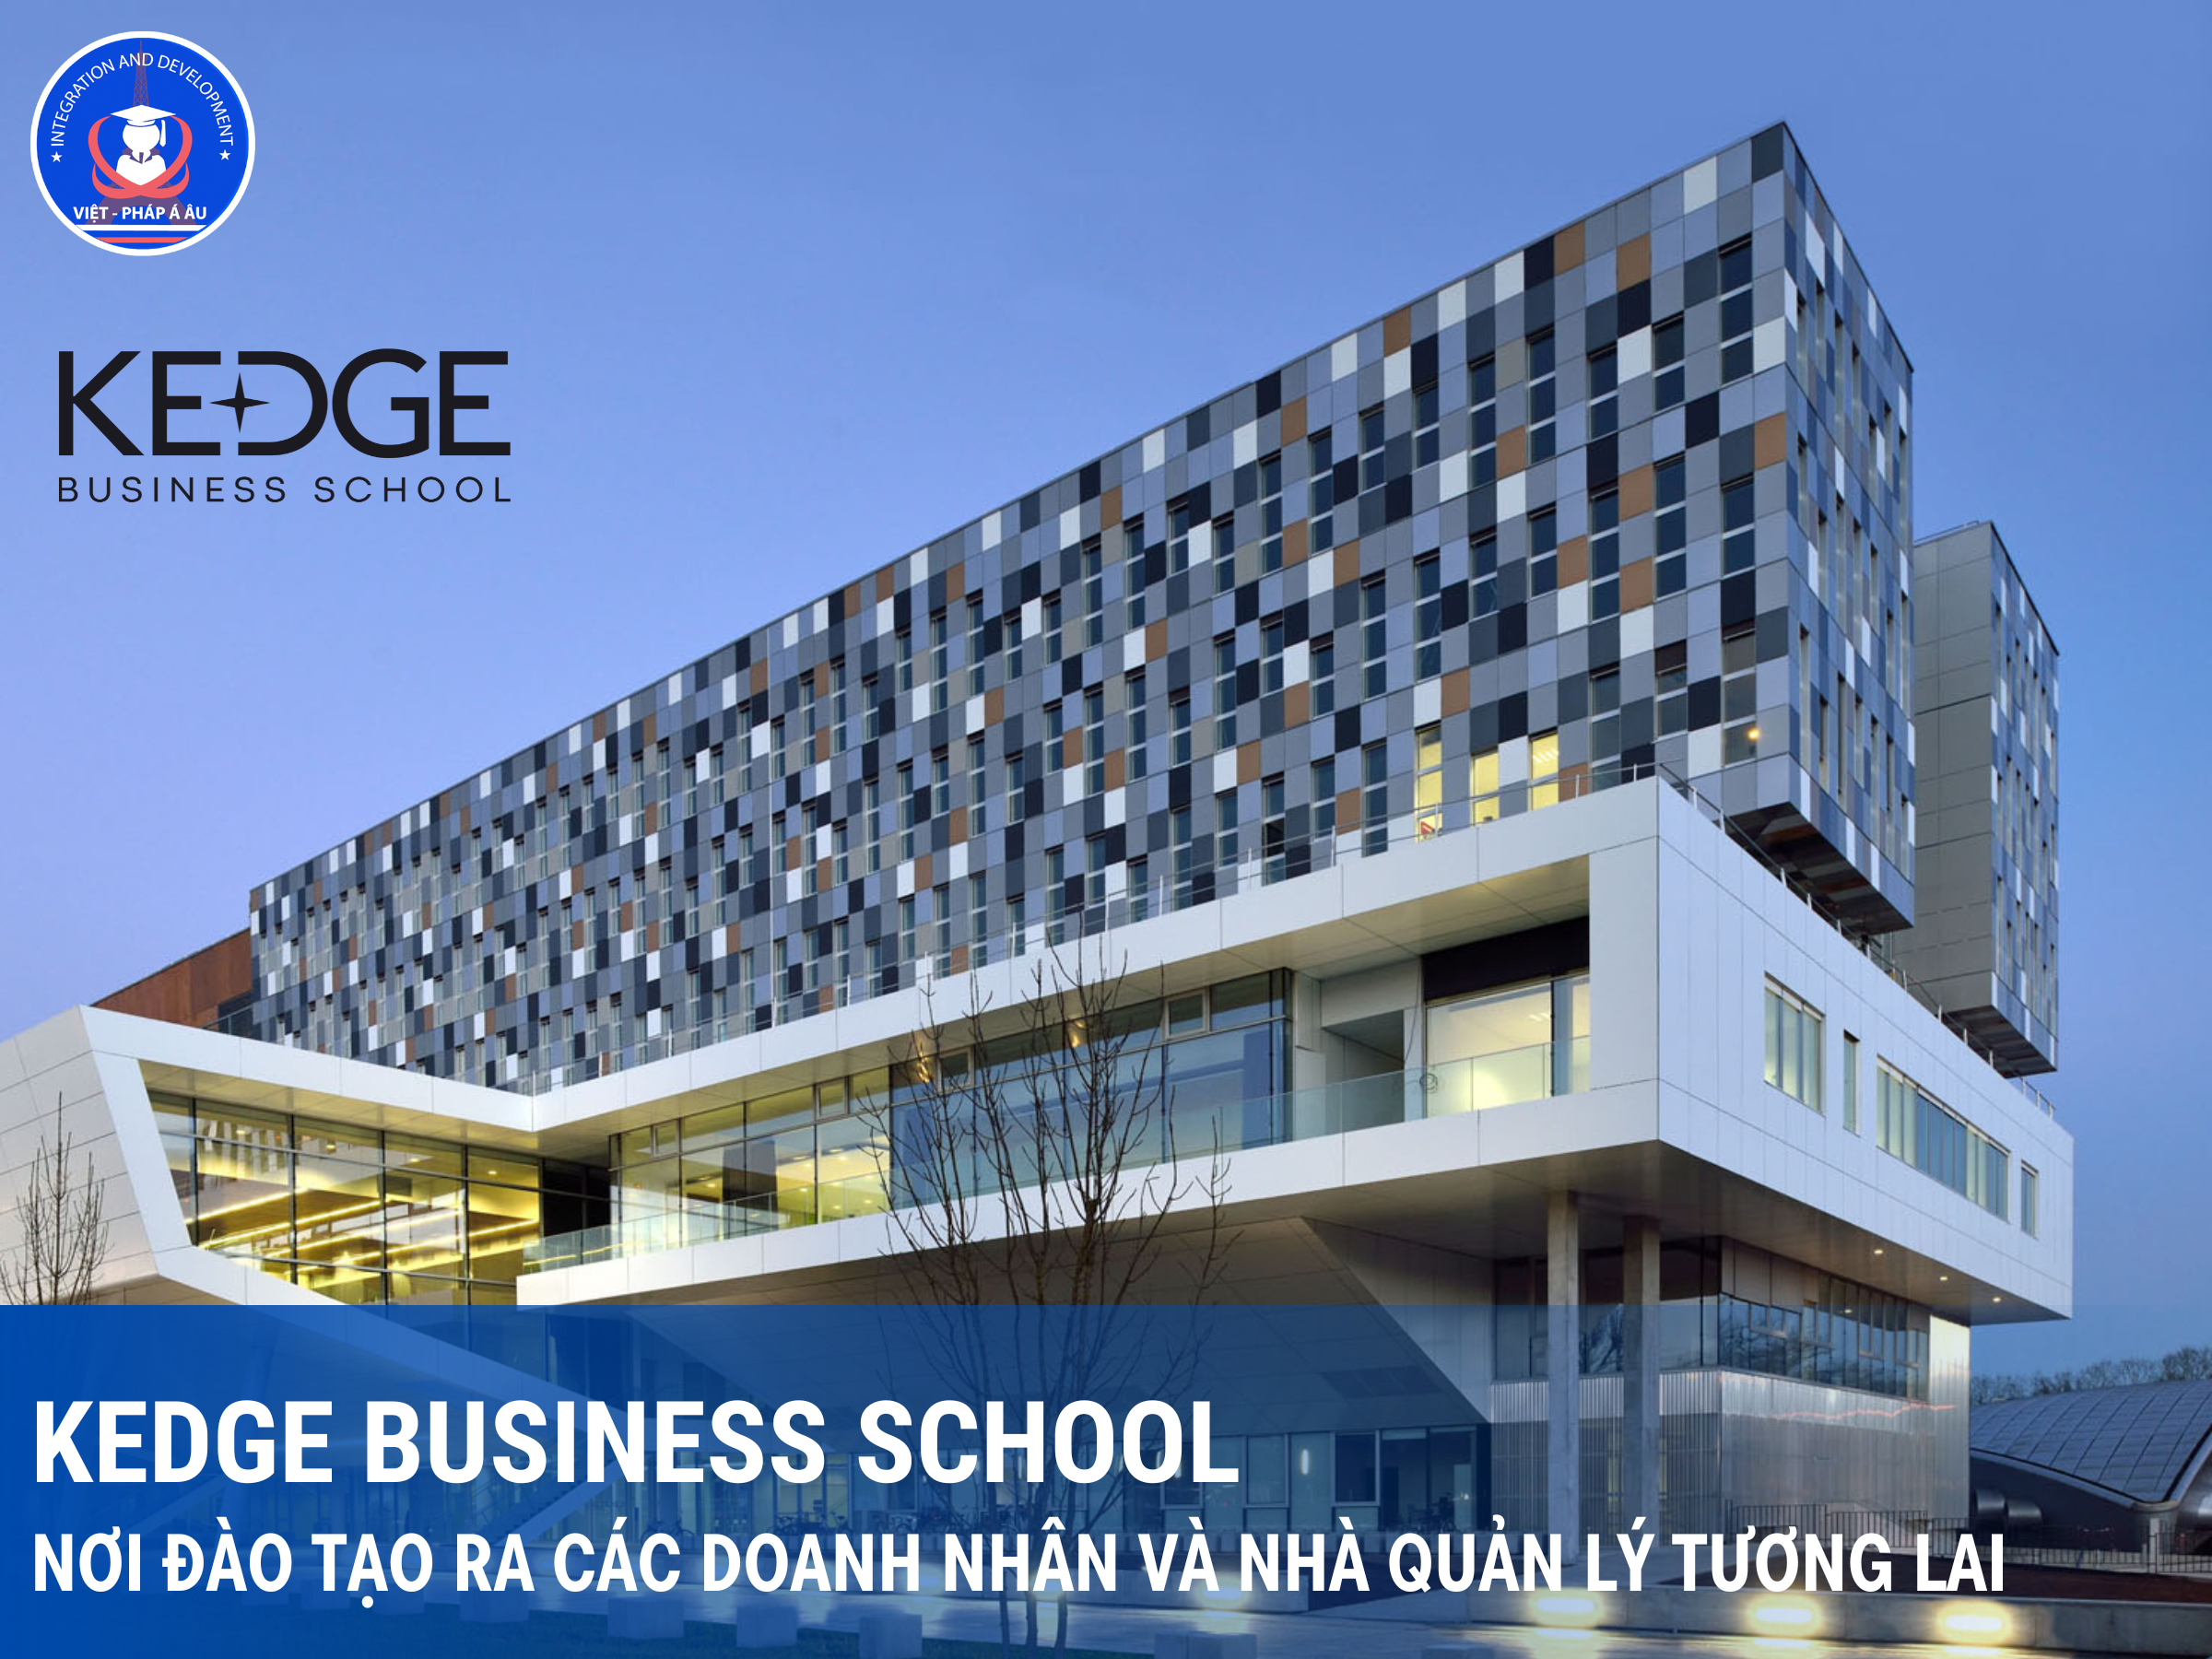 KEDGE BUSINESS SCHOOL